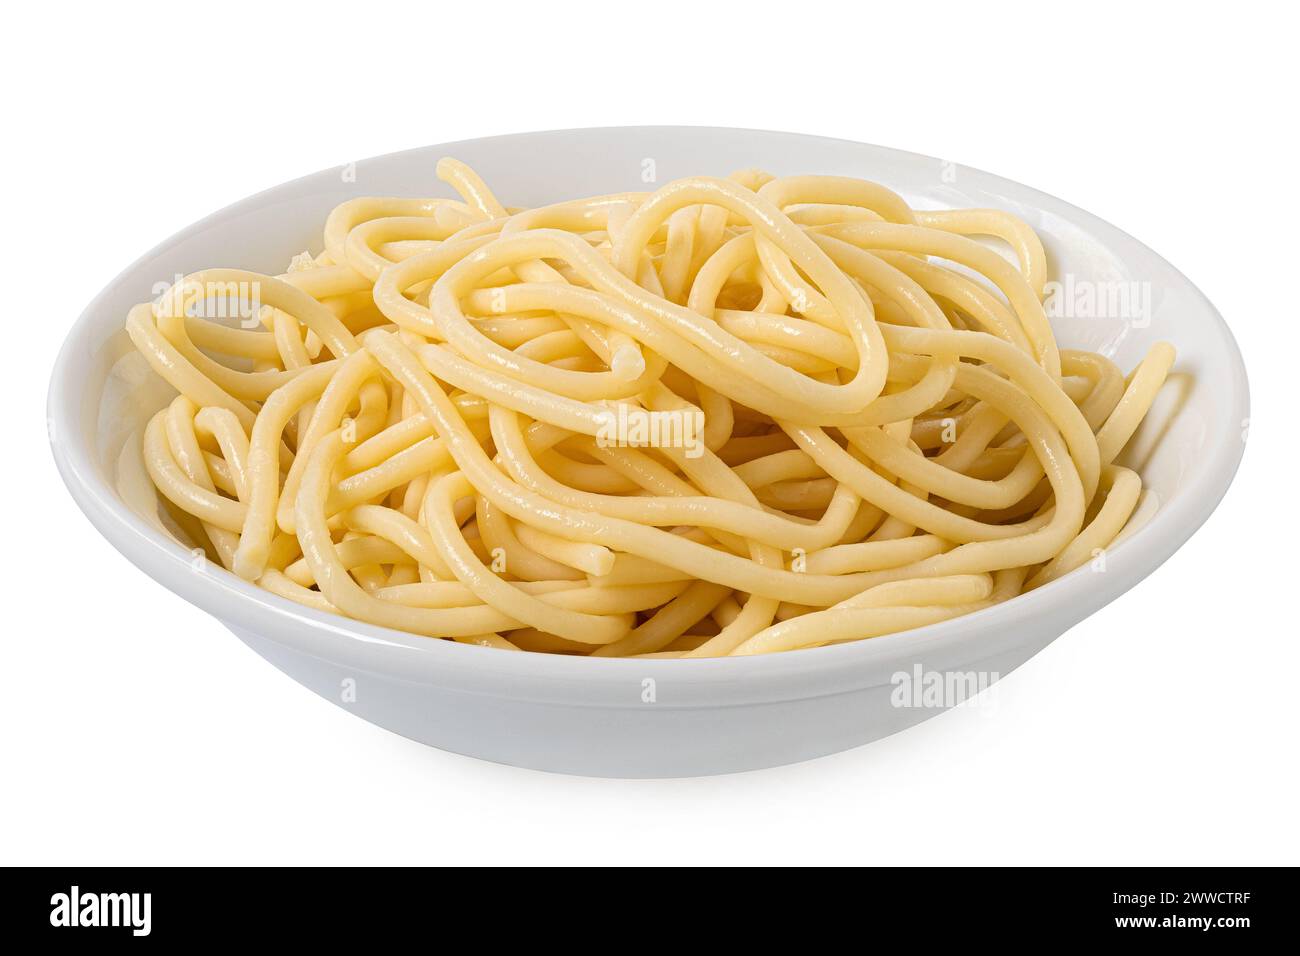 Espaguetis cocidos en un tazón de cerámica blanca aislado en blanco. Foto de stock